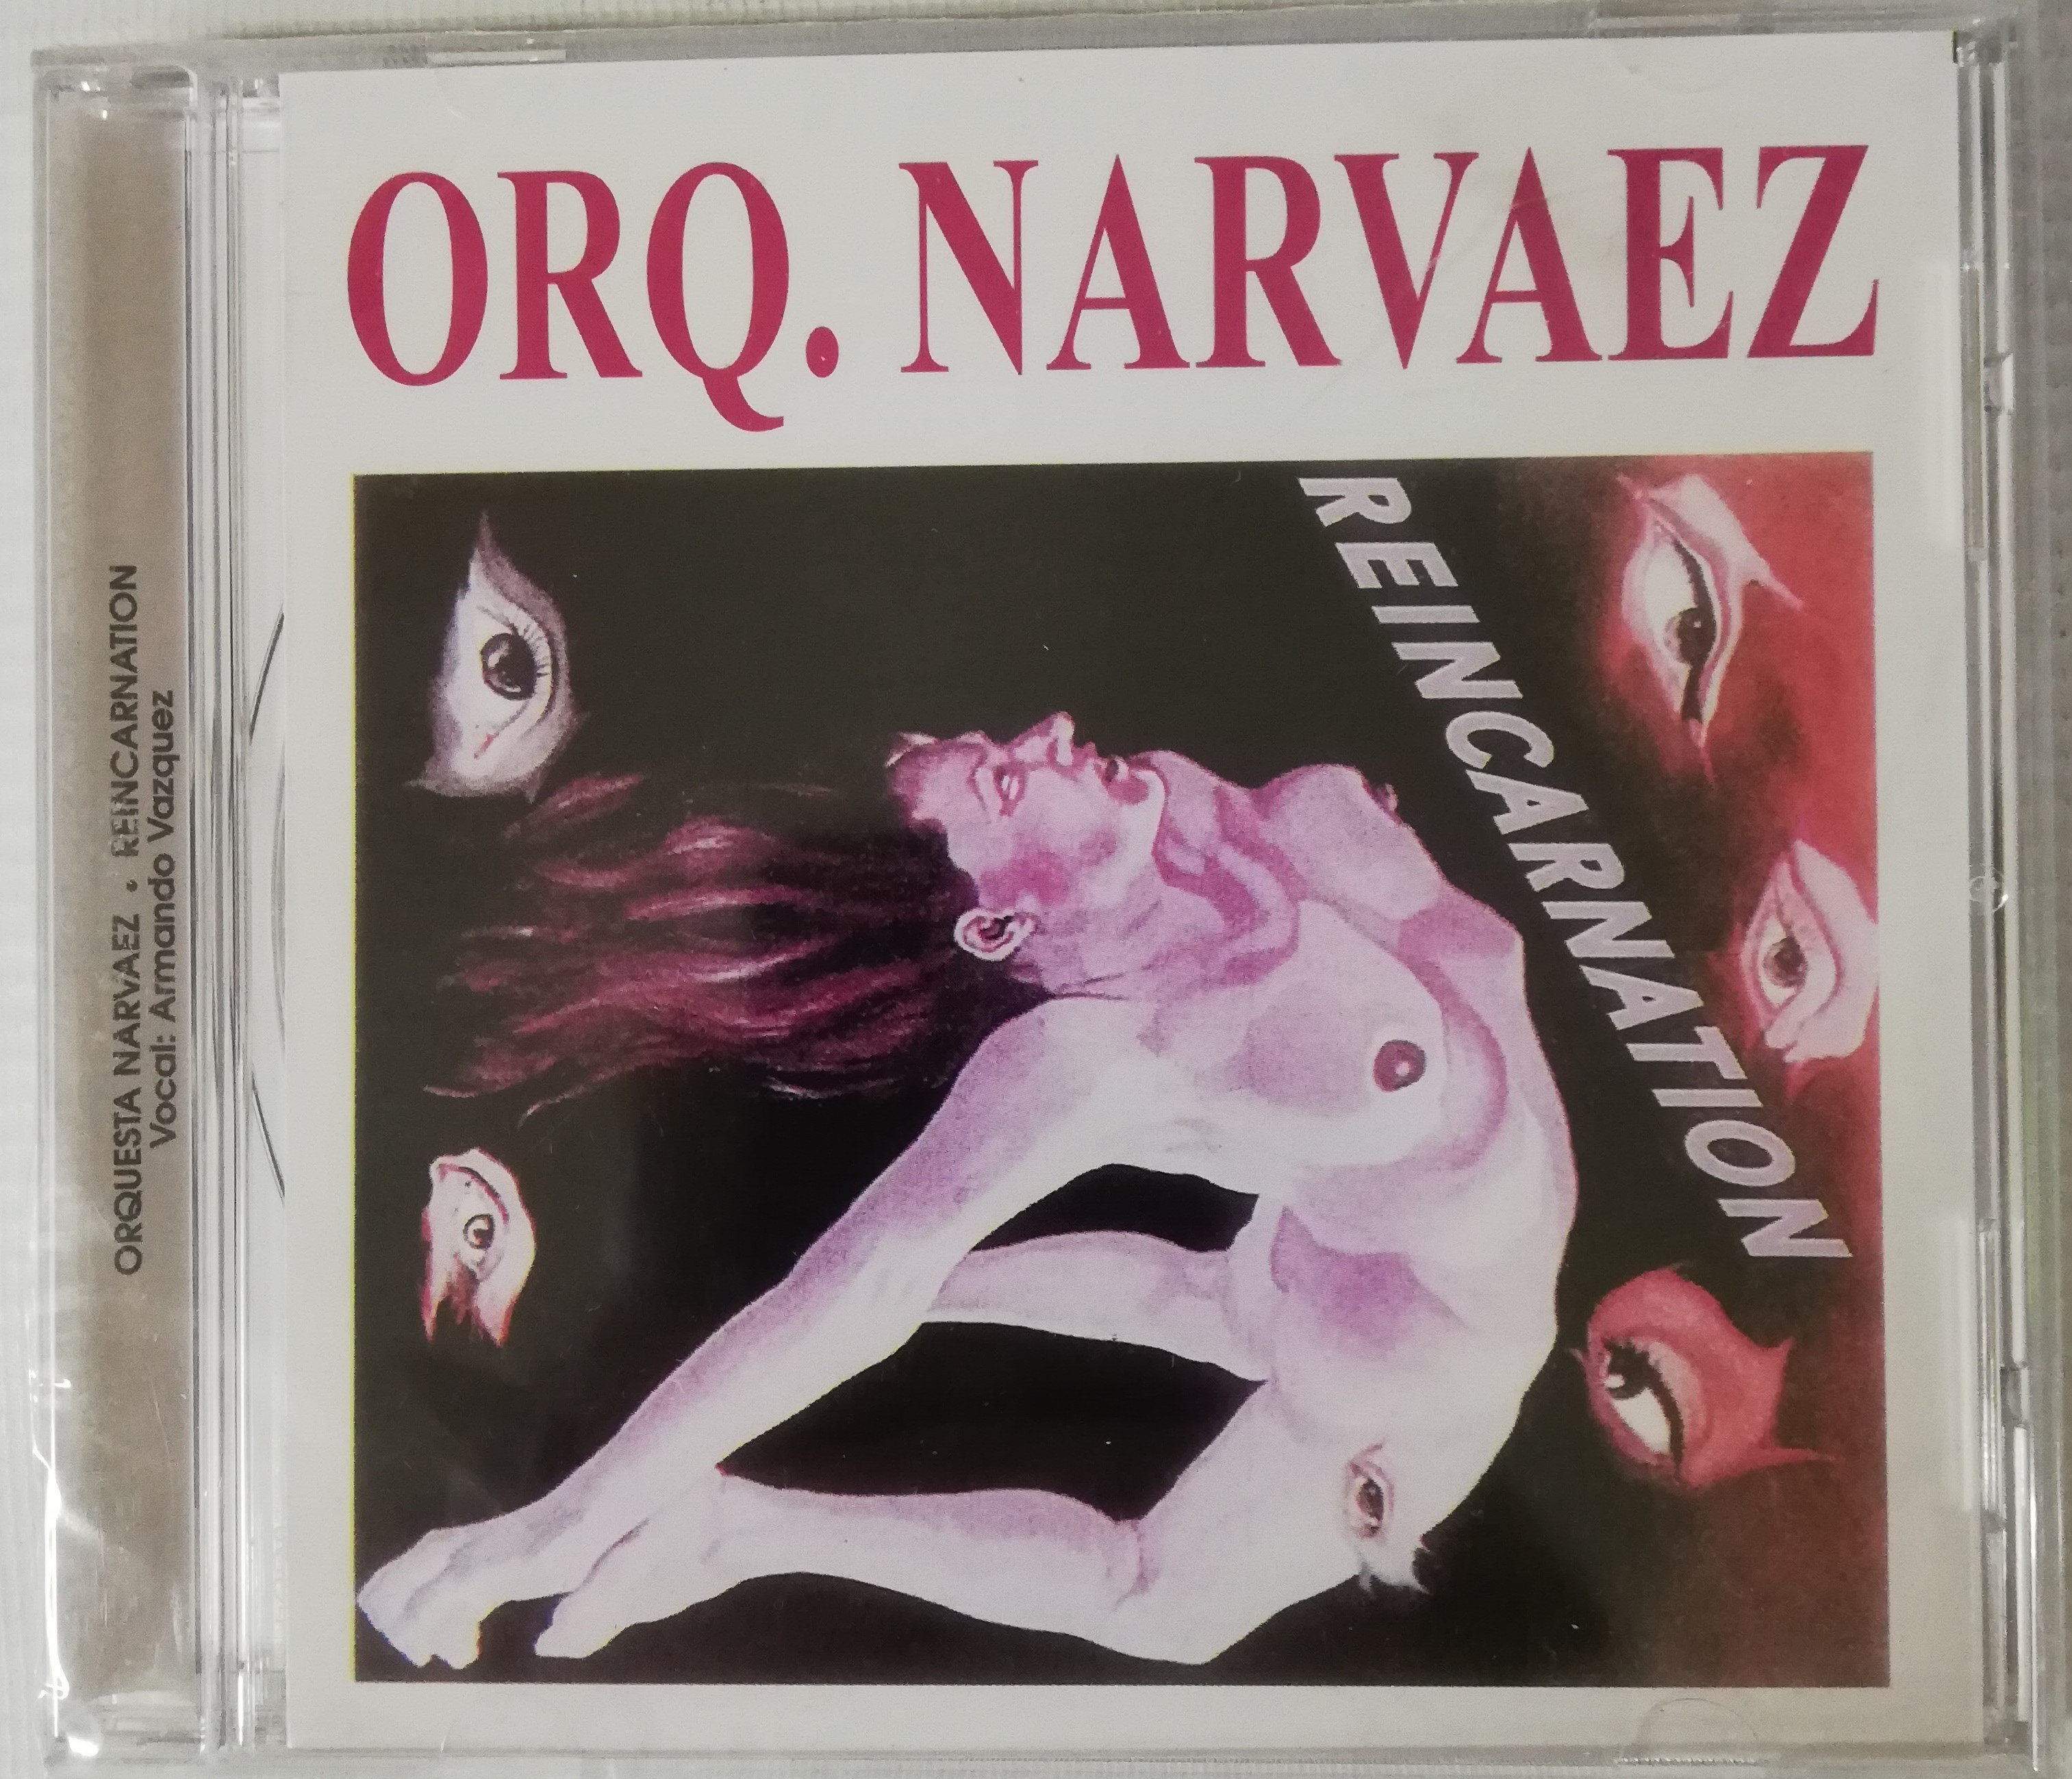 Imagen CD ORQUESTA NARVAEZ - REINCARNATION 1